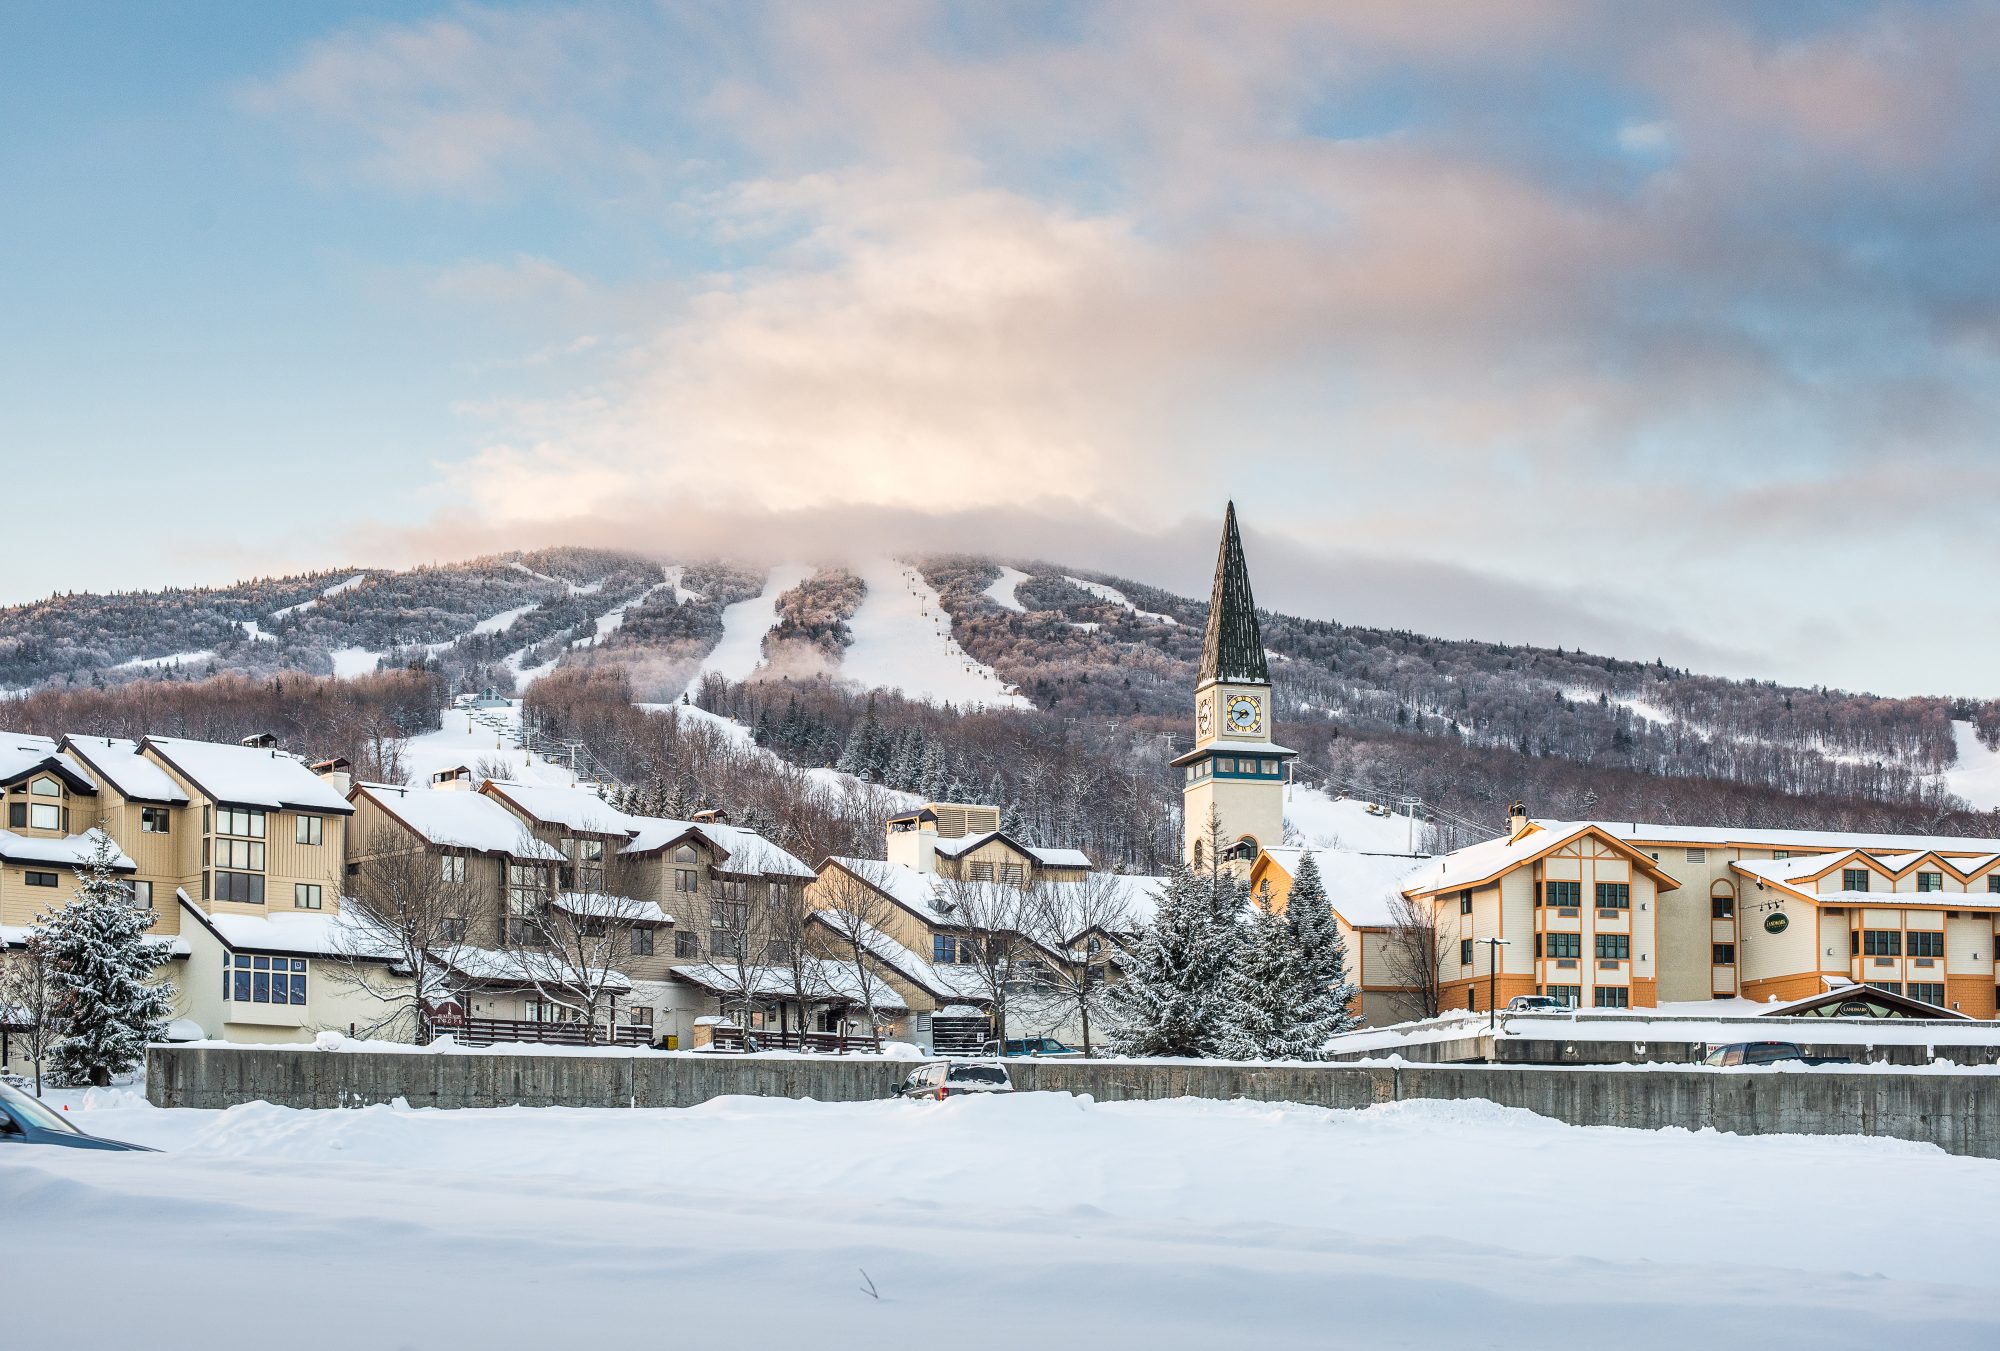 Stratton Mountain- Vermont- Alterra Mountain Company Announces $181 Million in Capital Improvements for the 2019/2020 Winter Season.